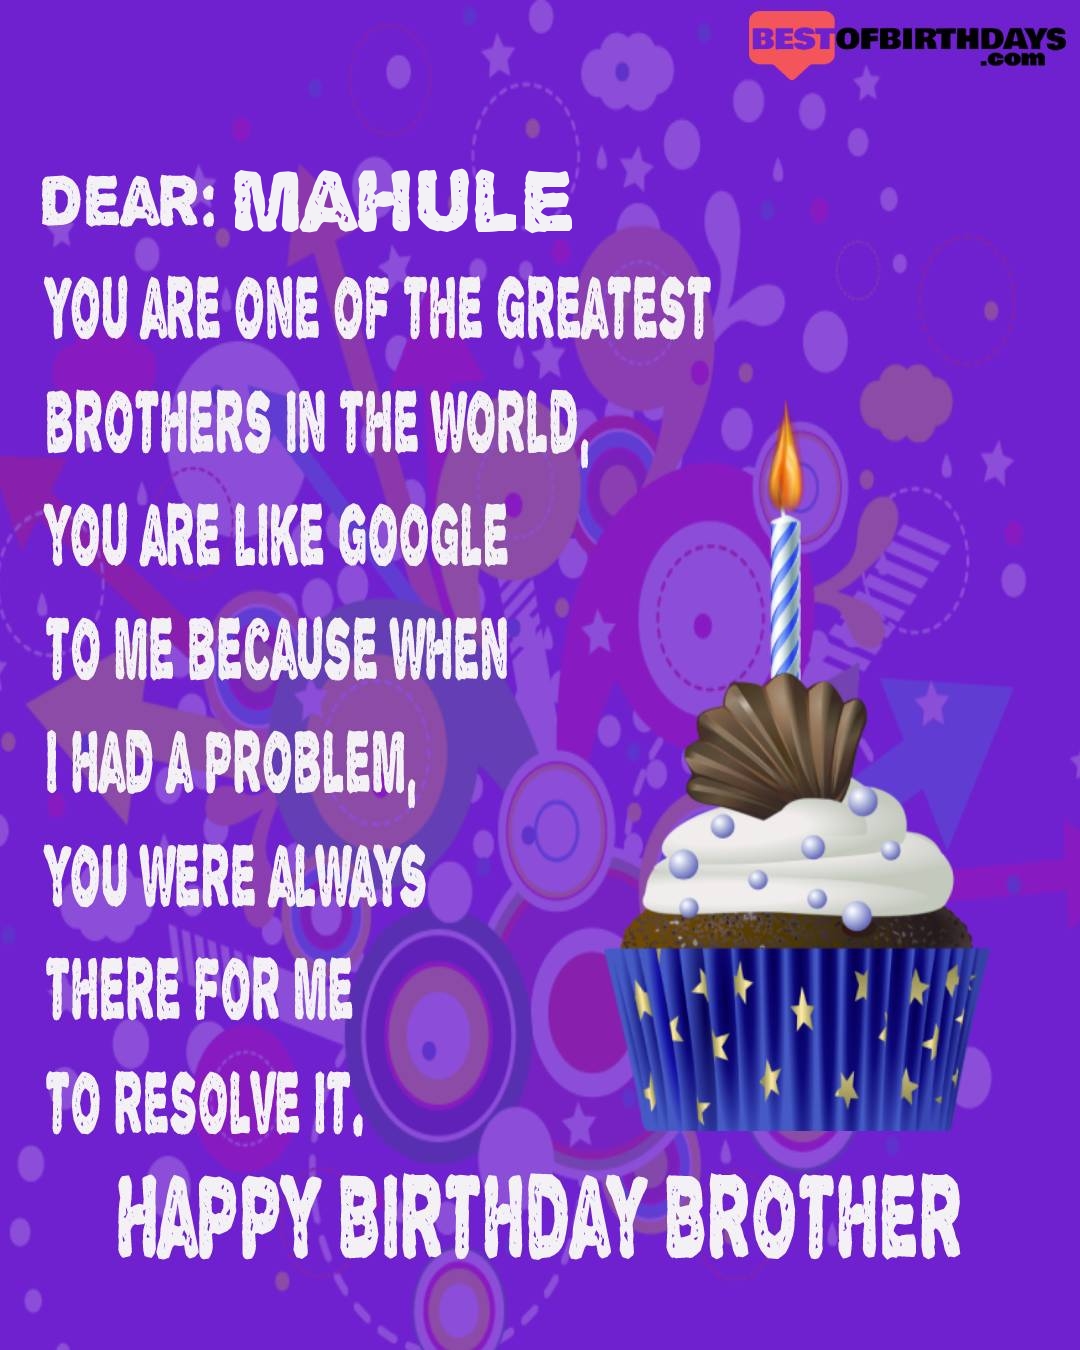 Happy birthday mahule bhai brother bro